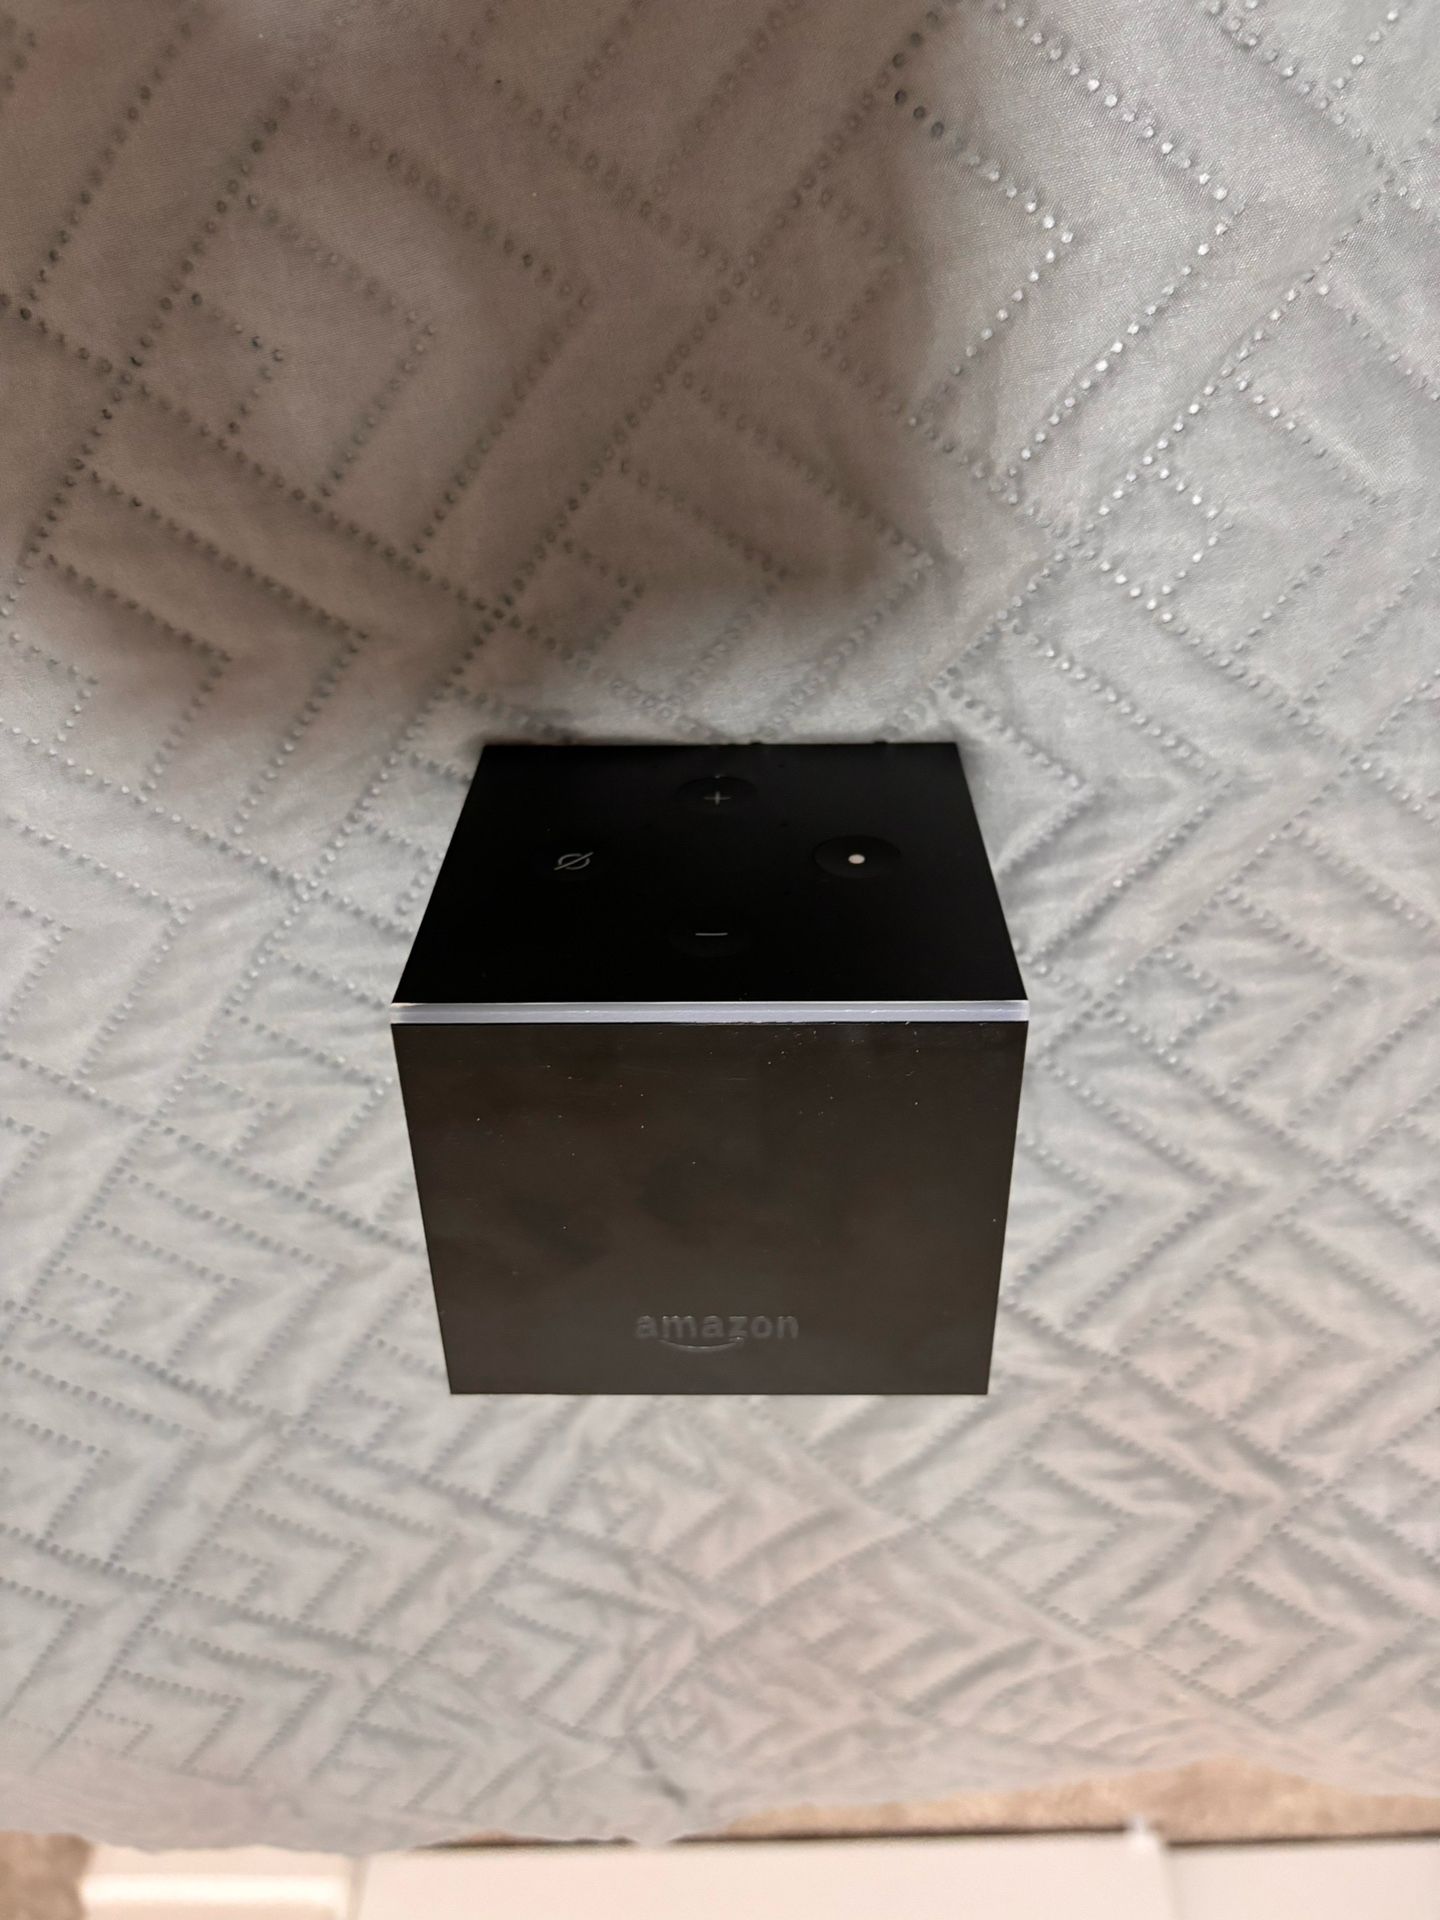 Amazon Fire TV Cube Streamer and Speaker